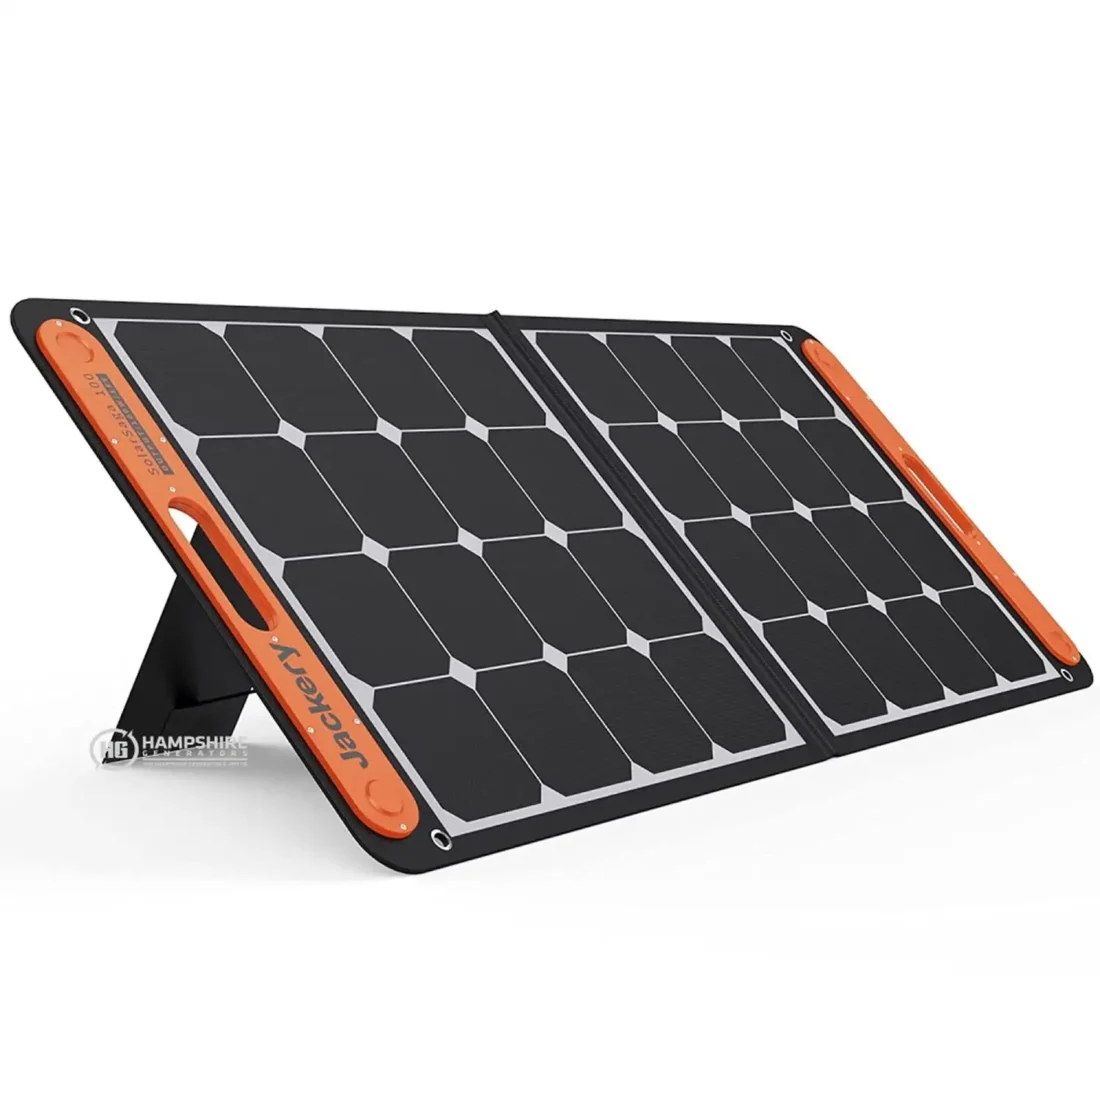 Jackery Explorer 1000 Portable Power Station + 2 SolarSaga 100W Solar